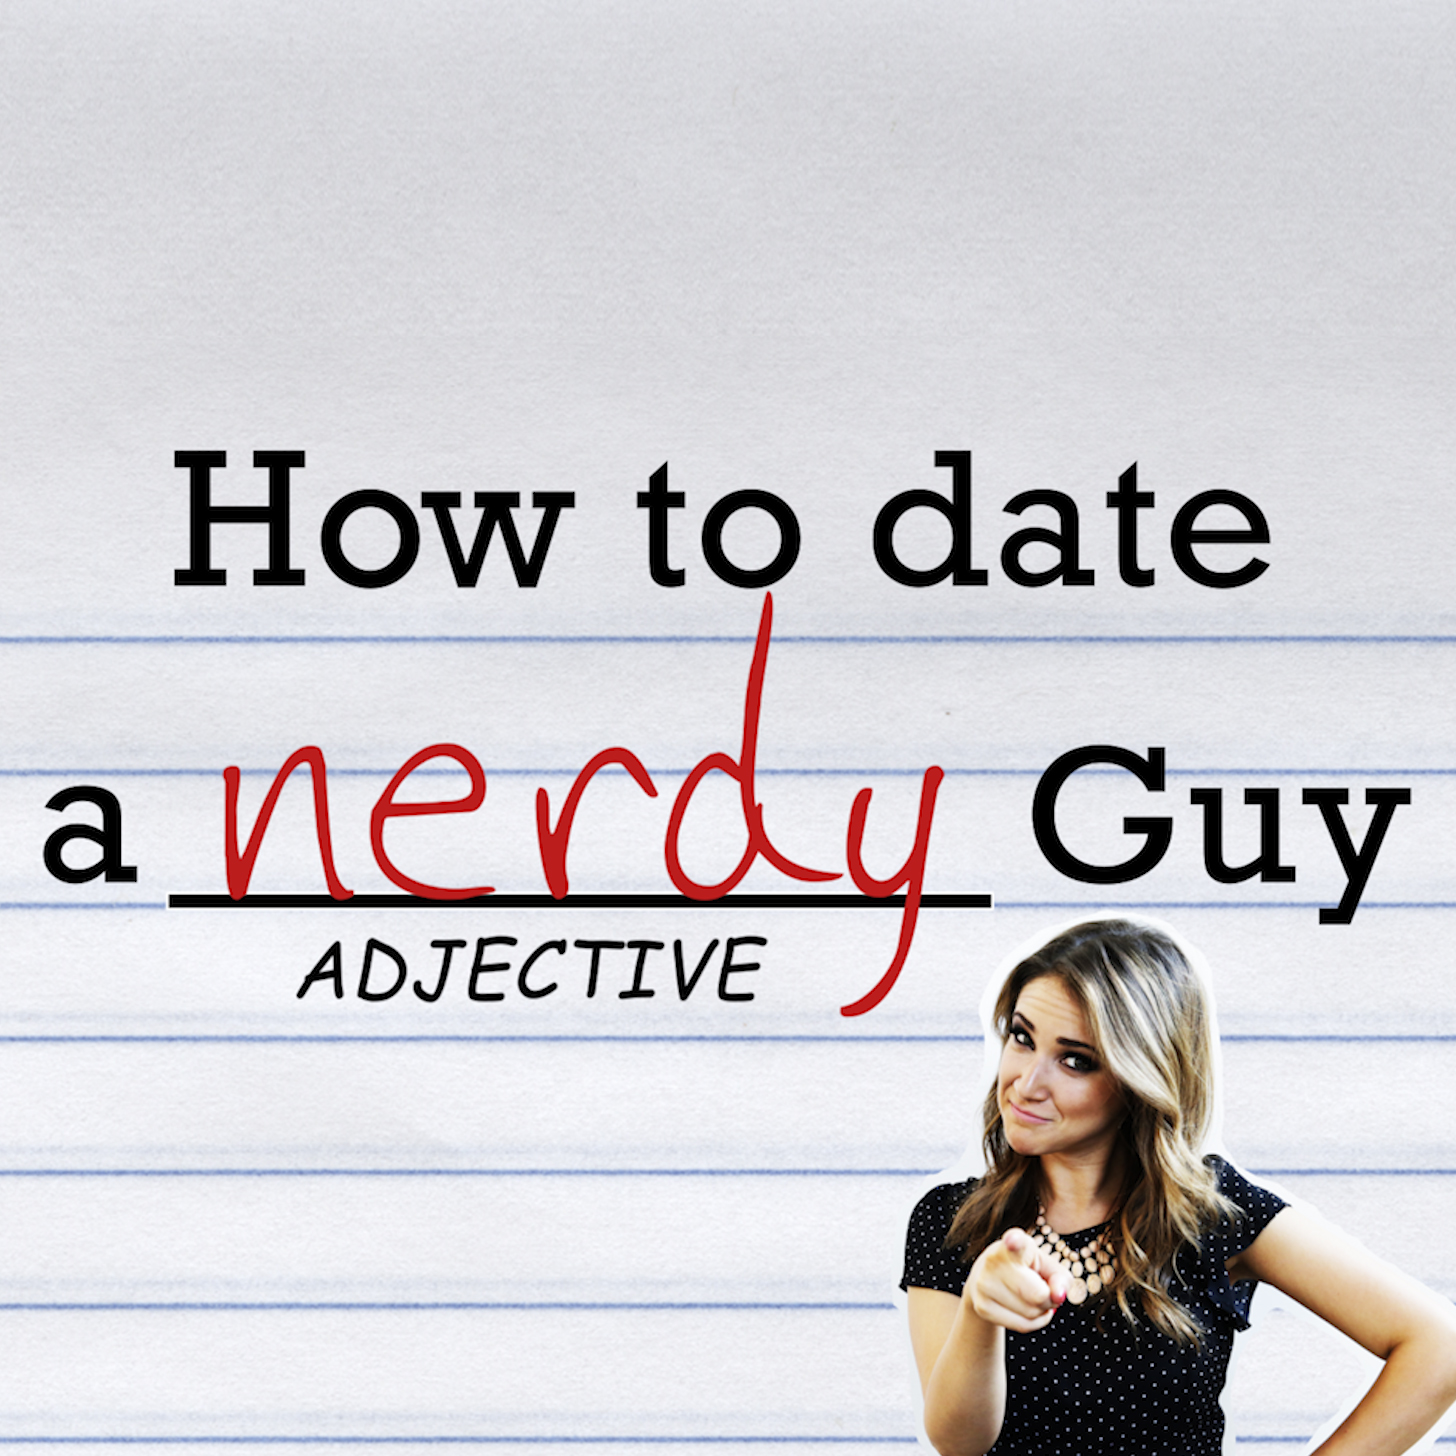 nerdy girl is hot dating simulator